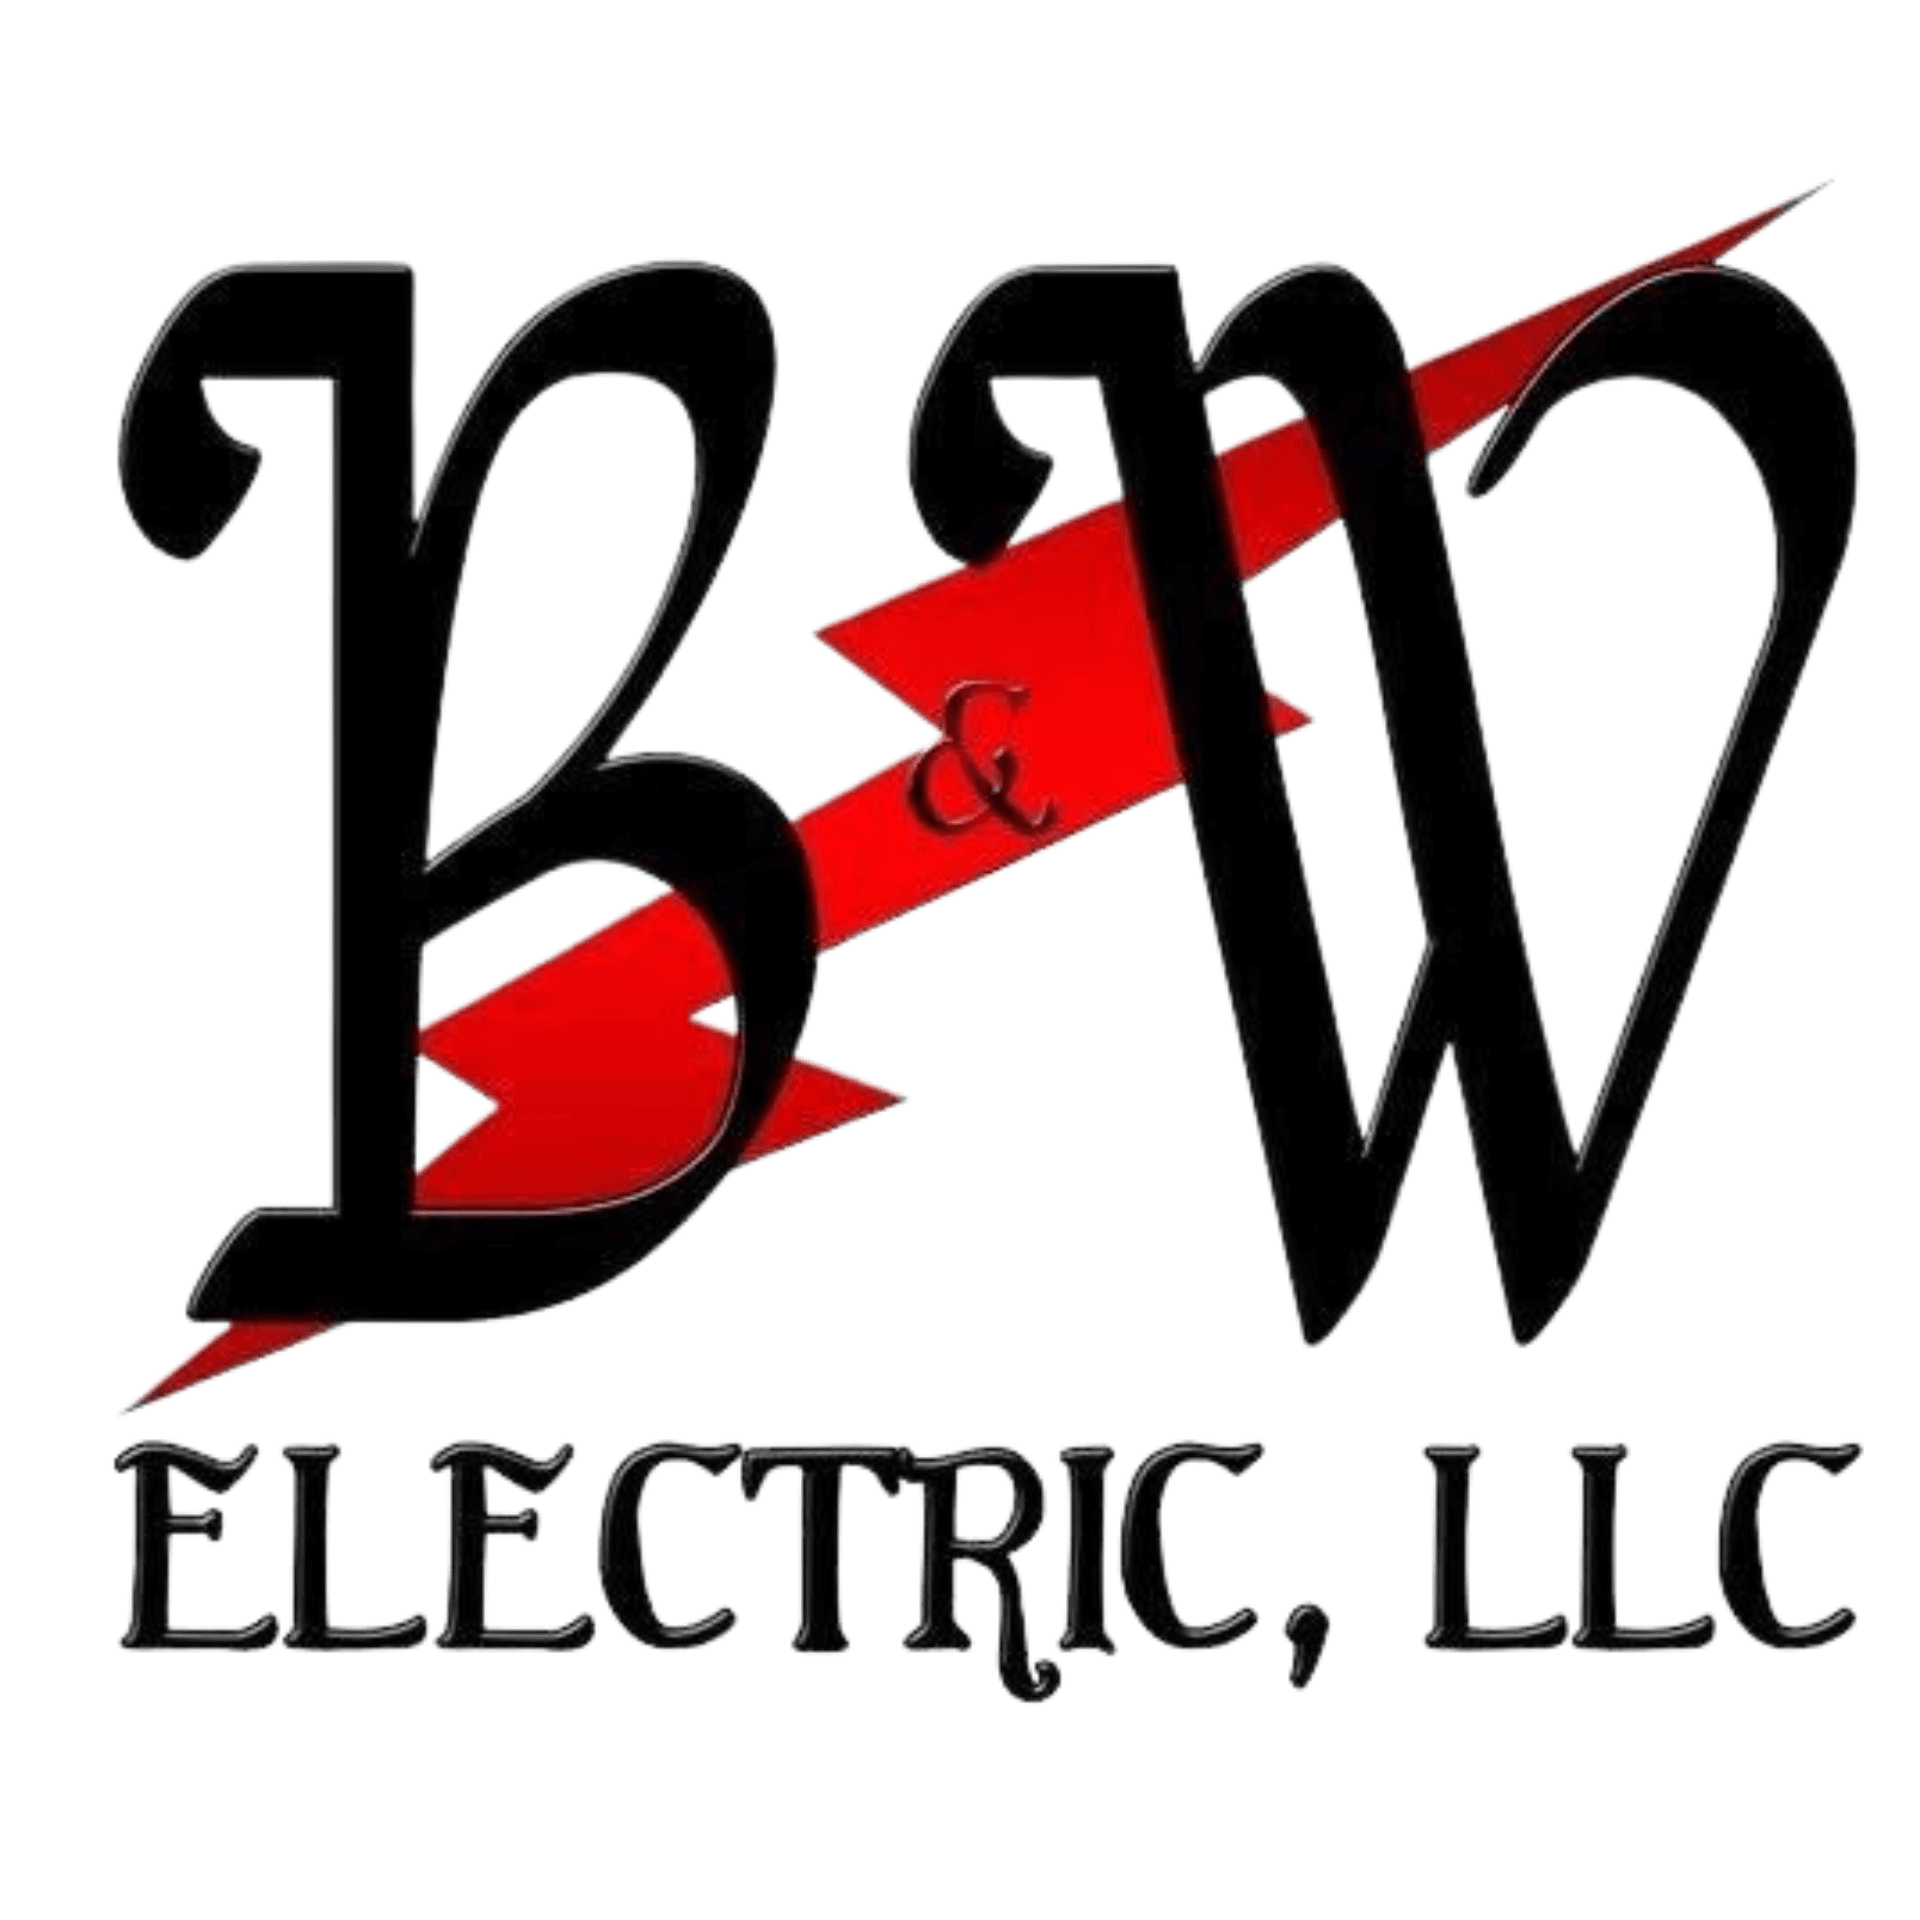 Denver Electrician Logo